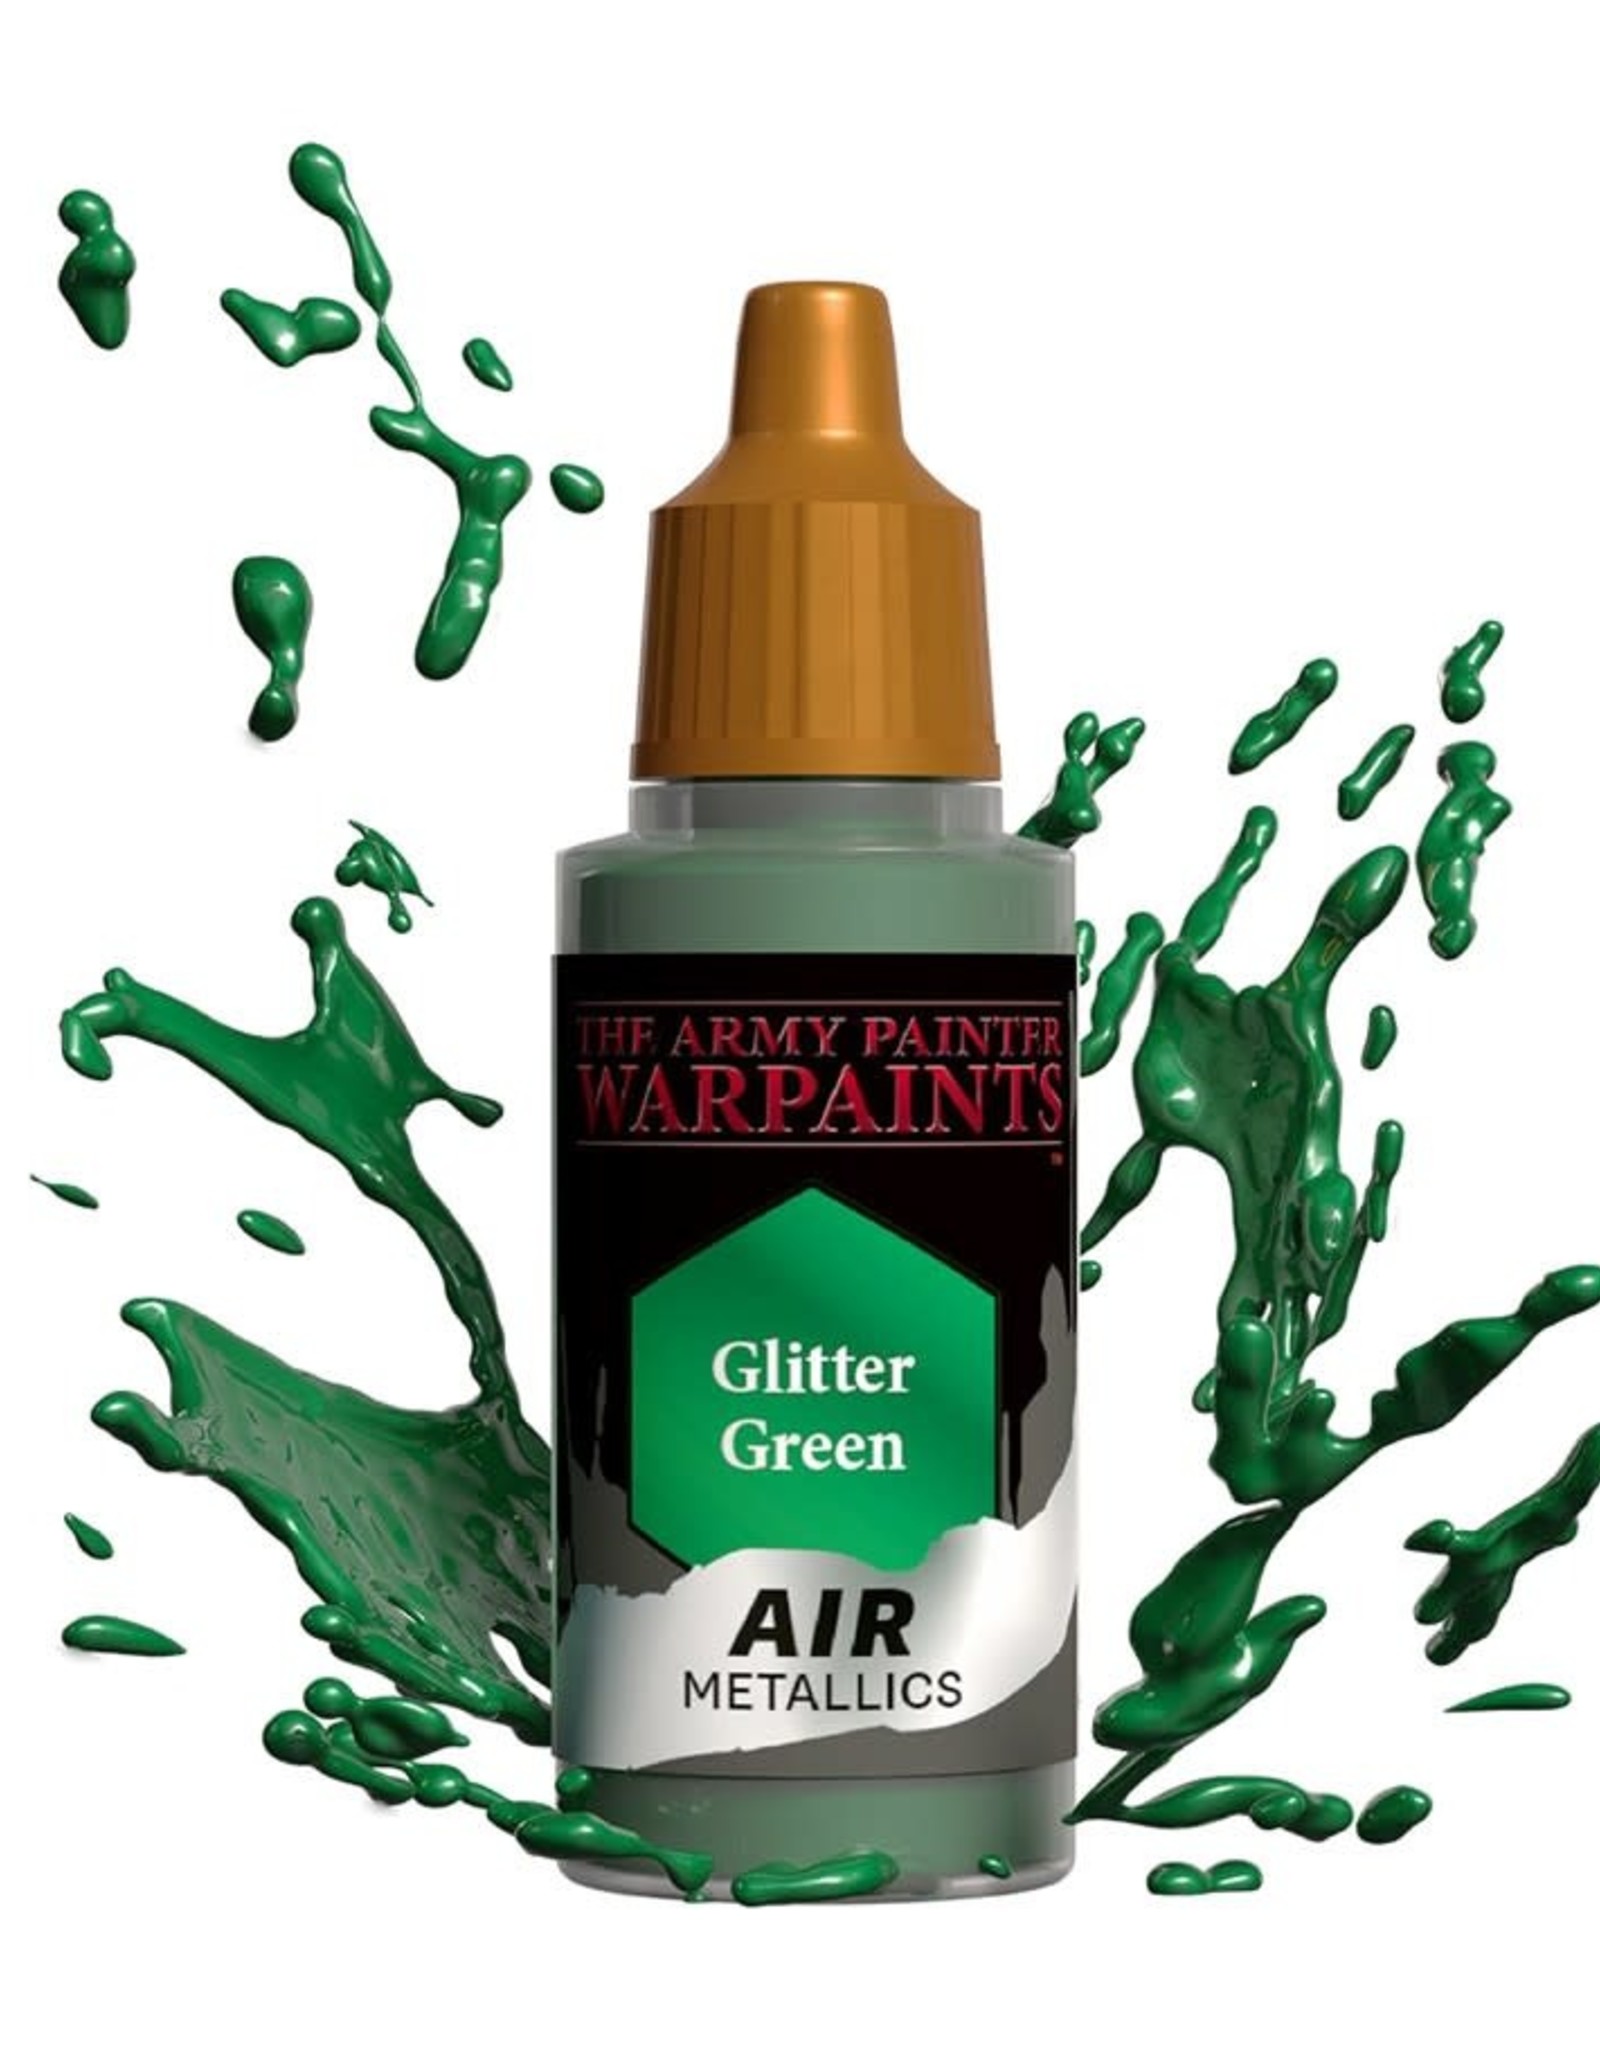 The Army Painter TAP Warpaints Air Metallics: Glitter Green